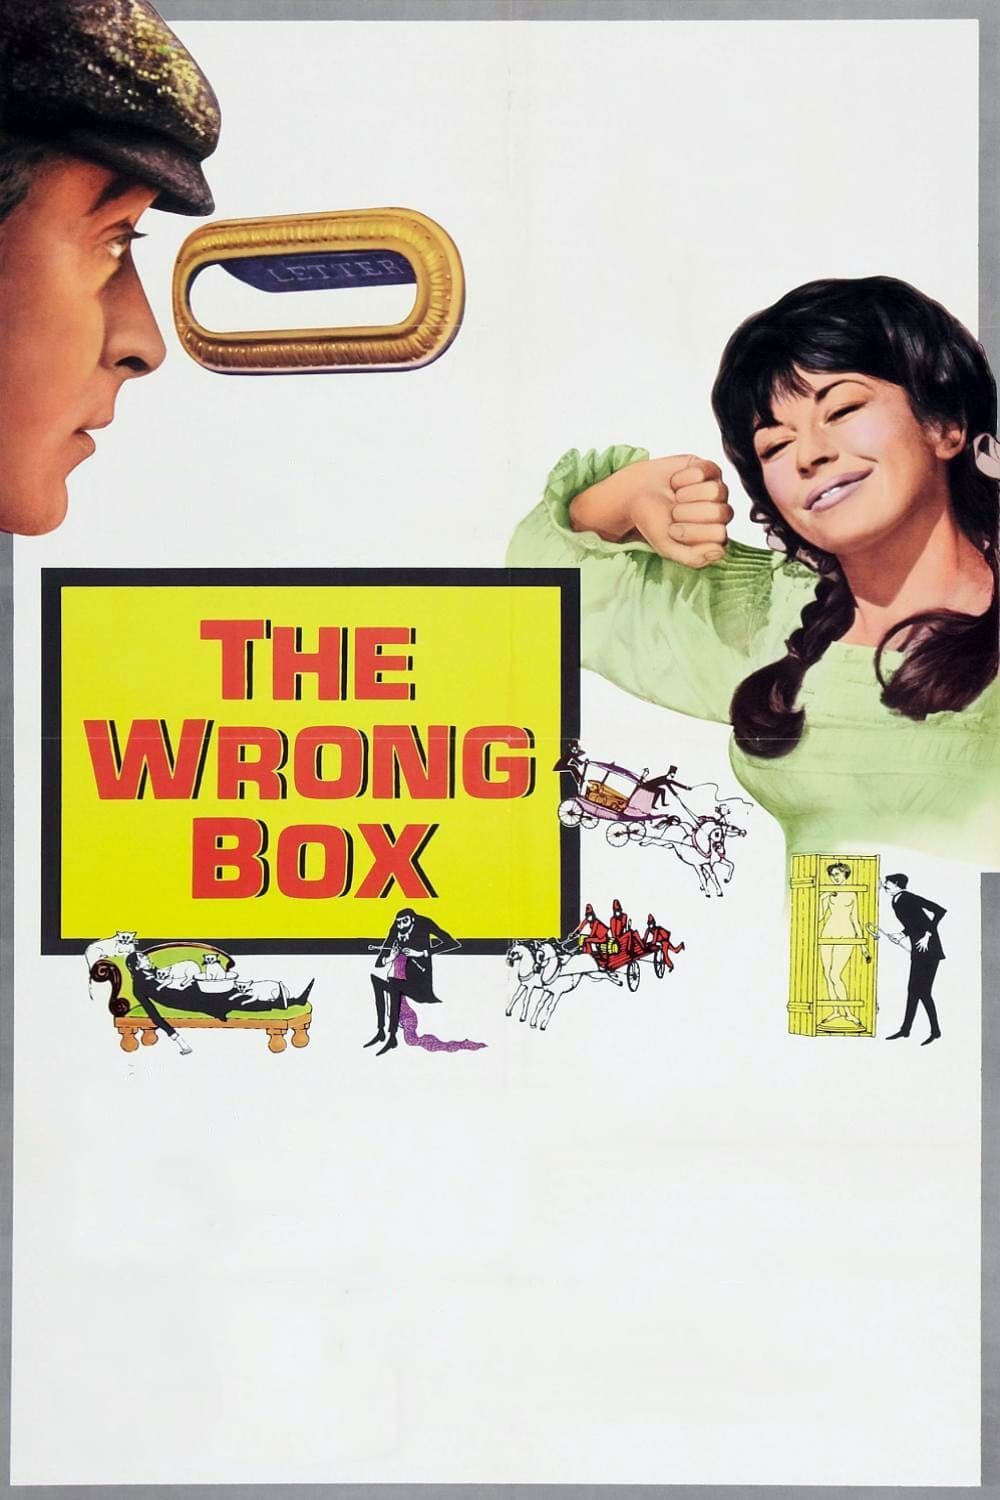 The Wrong Box (1966)